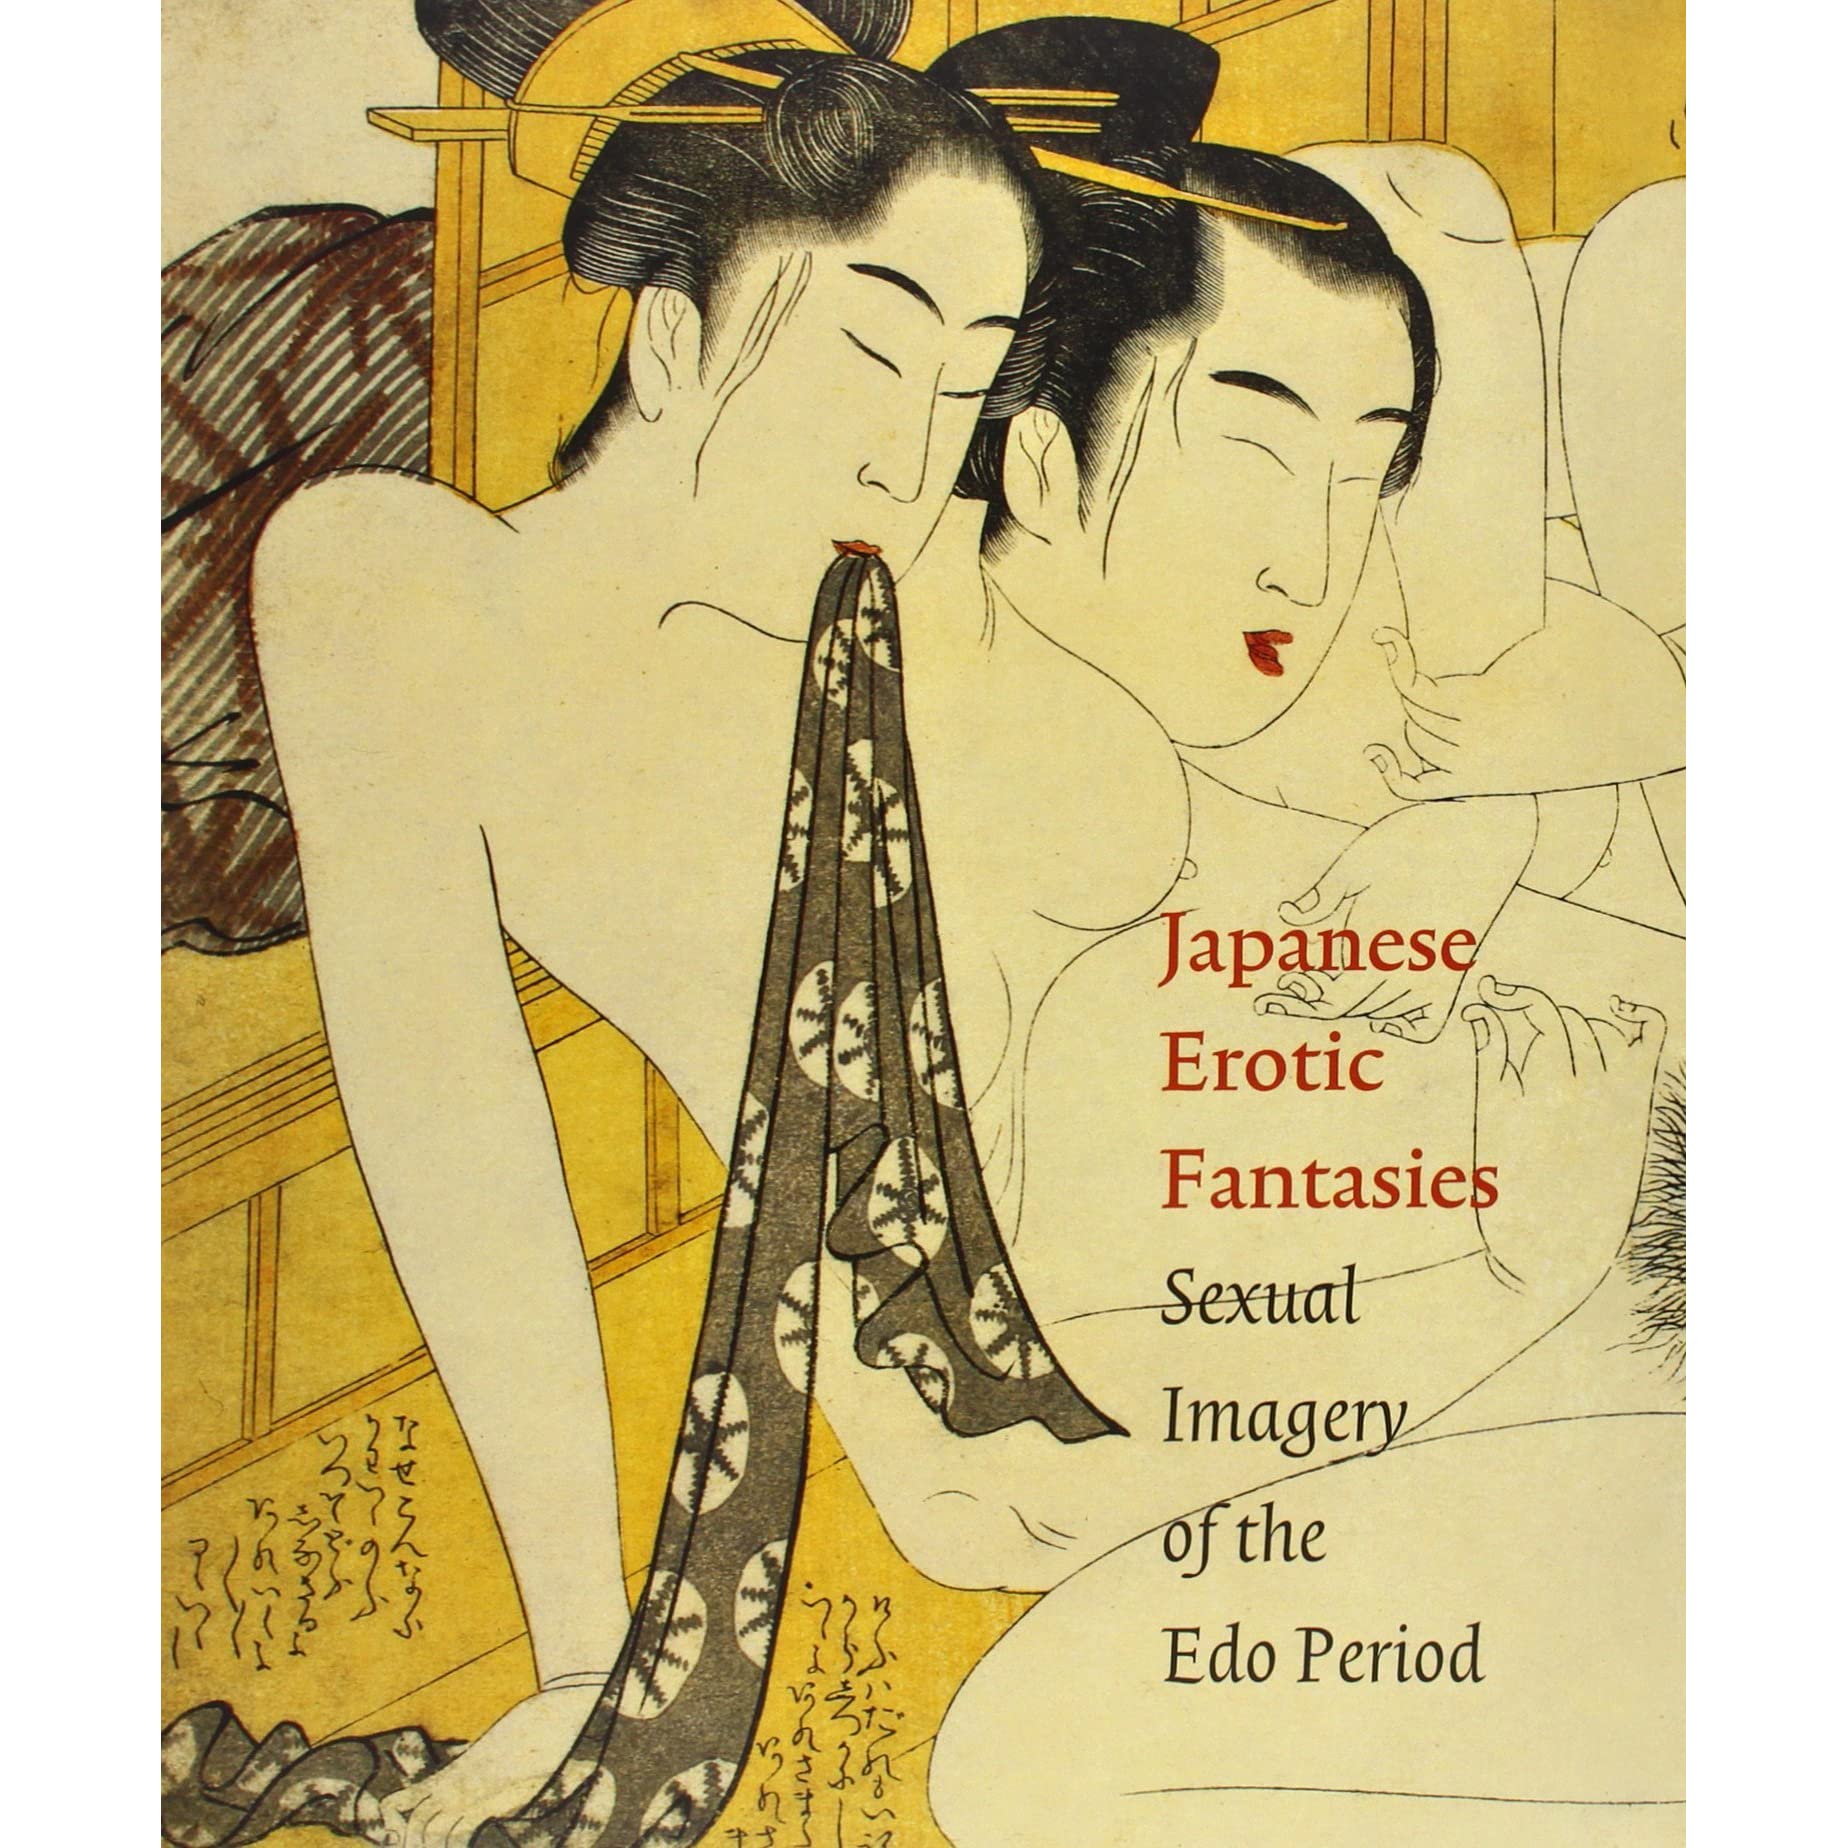 Japanese erotic fantasies